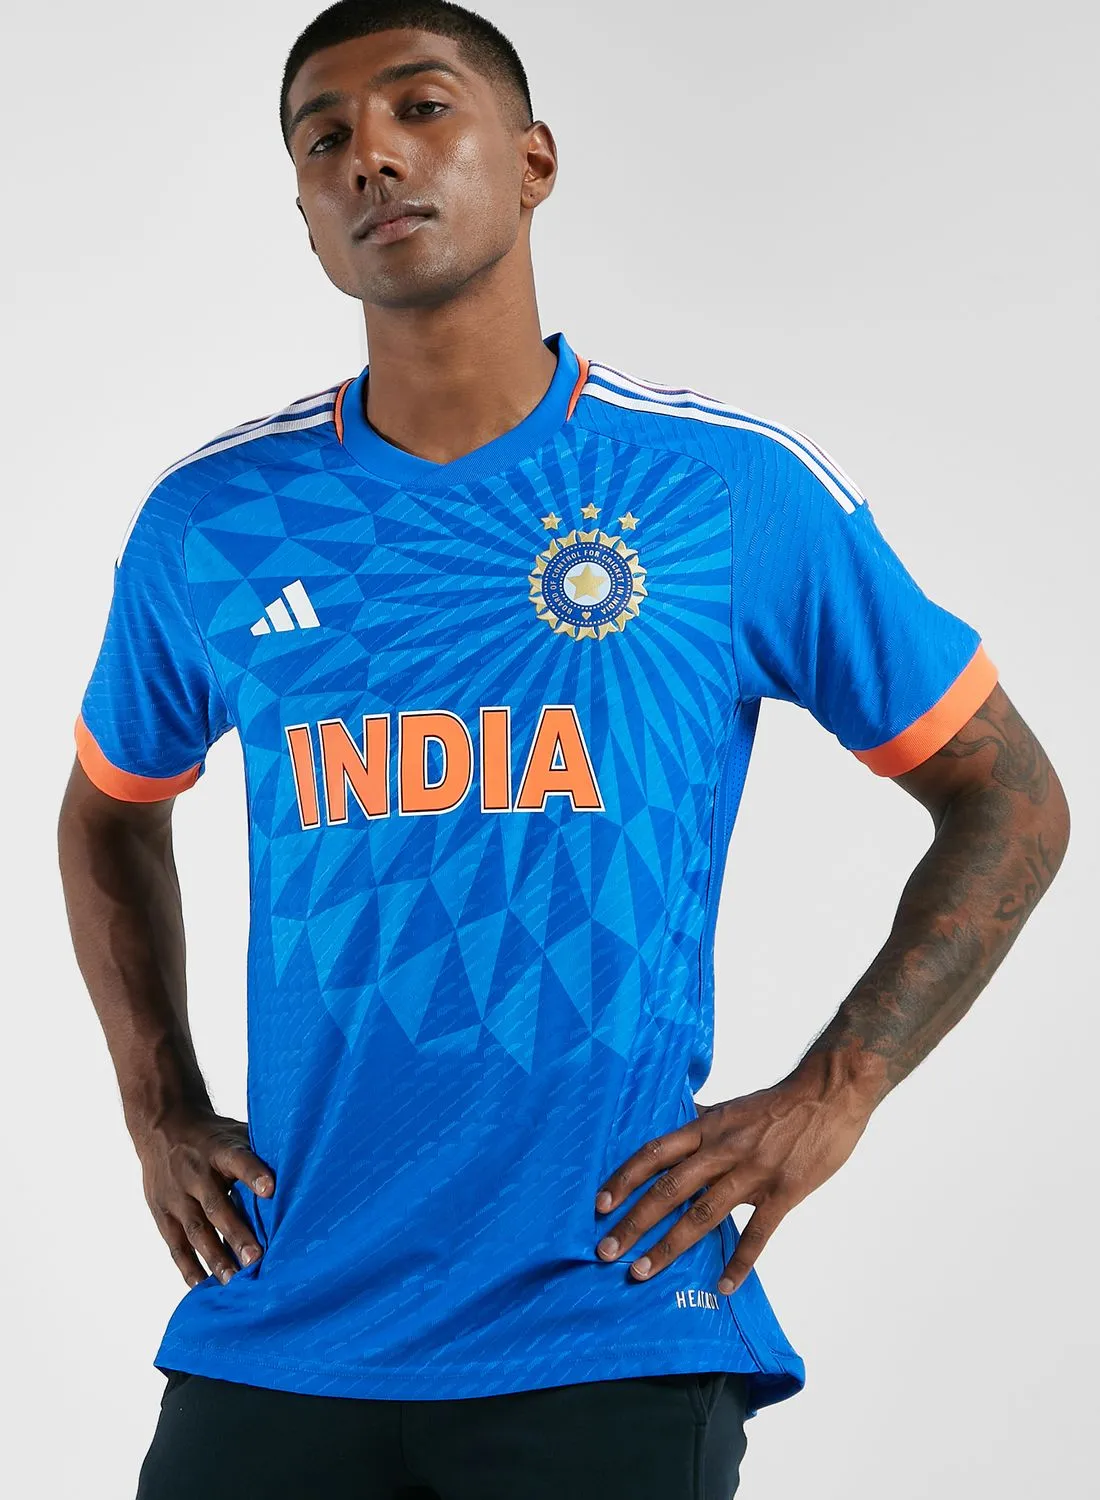 Adidas T20 India Cricket Jersey